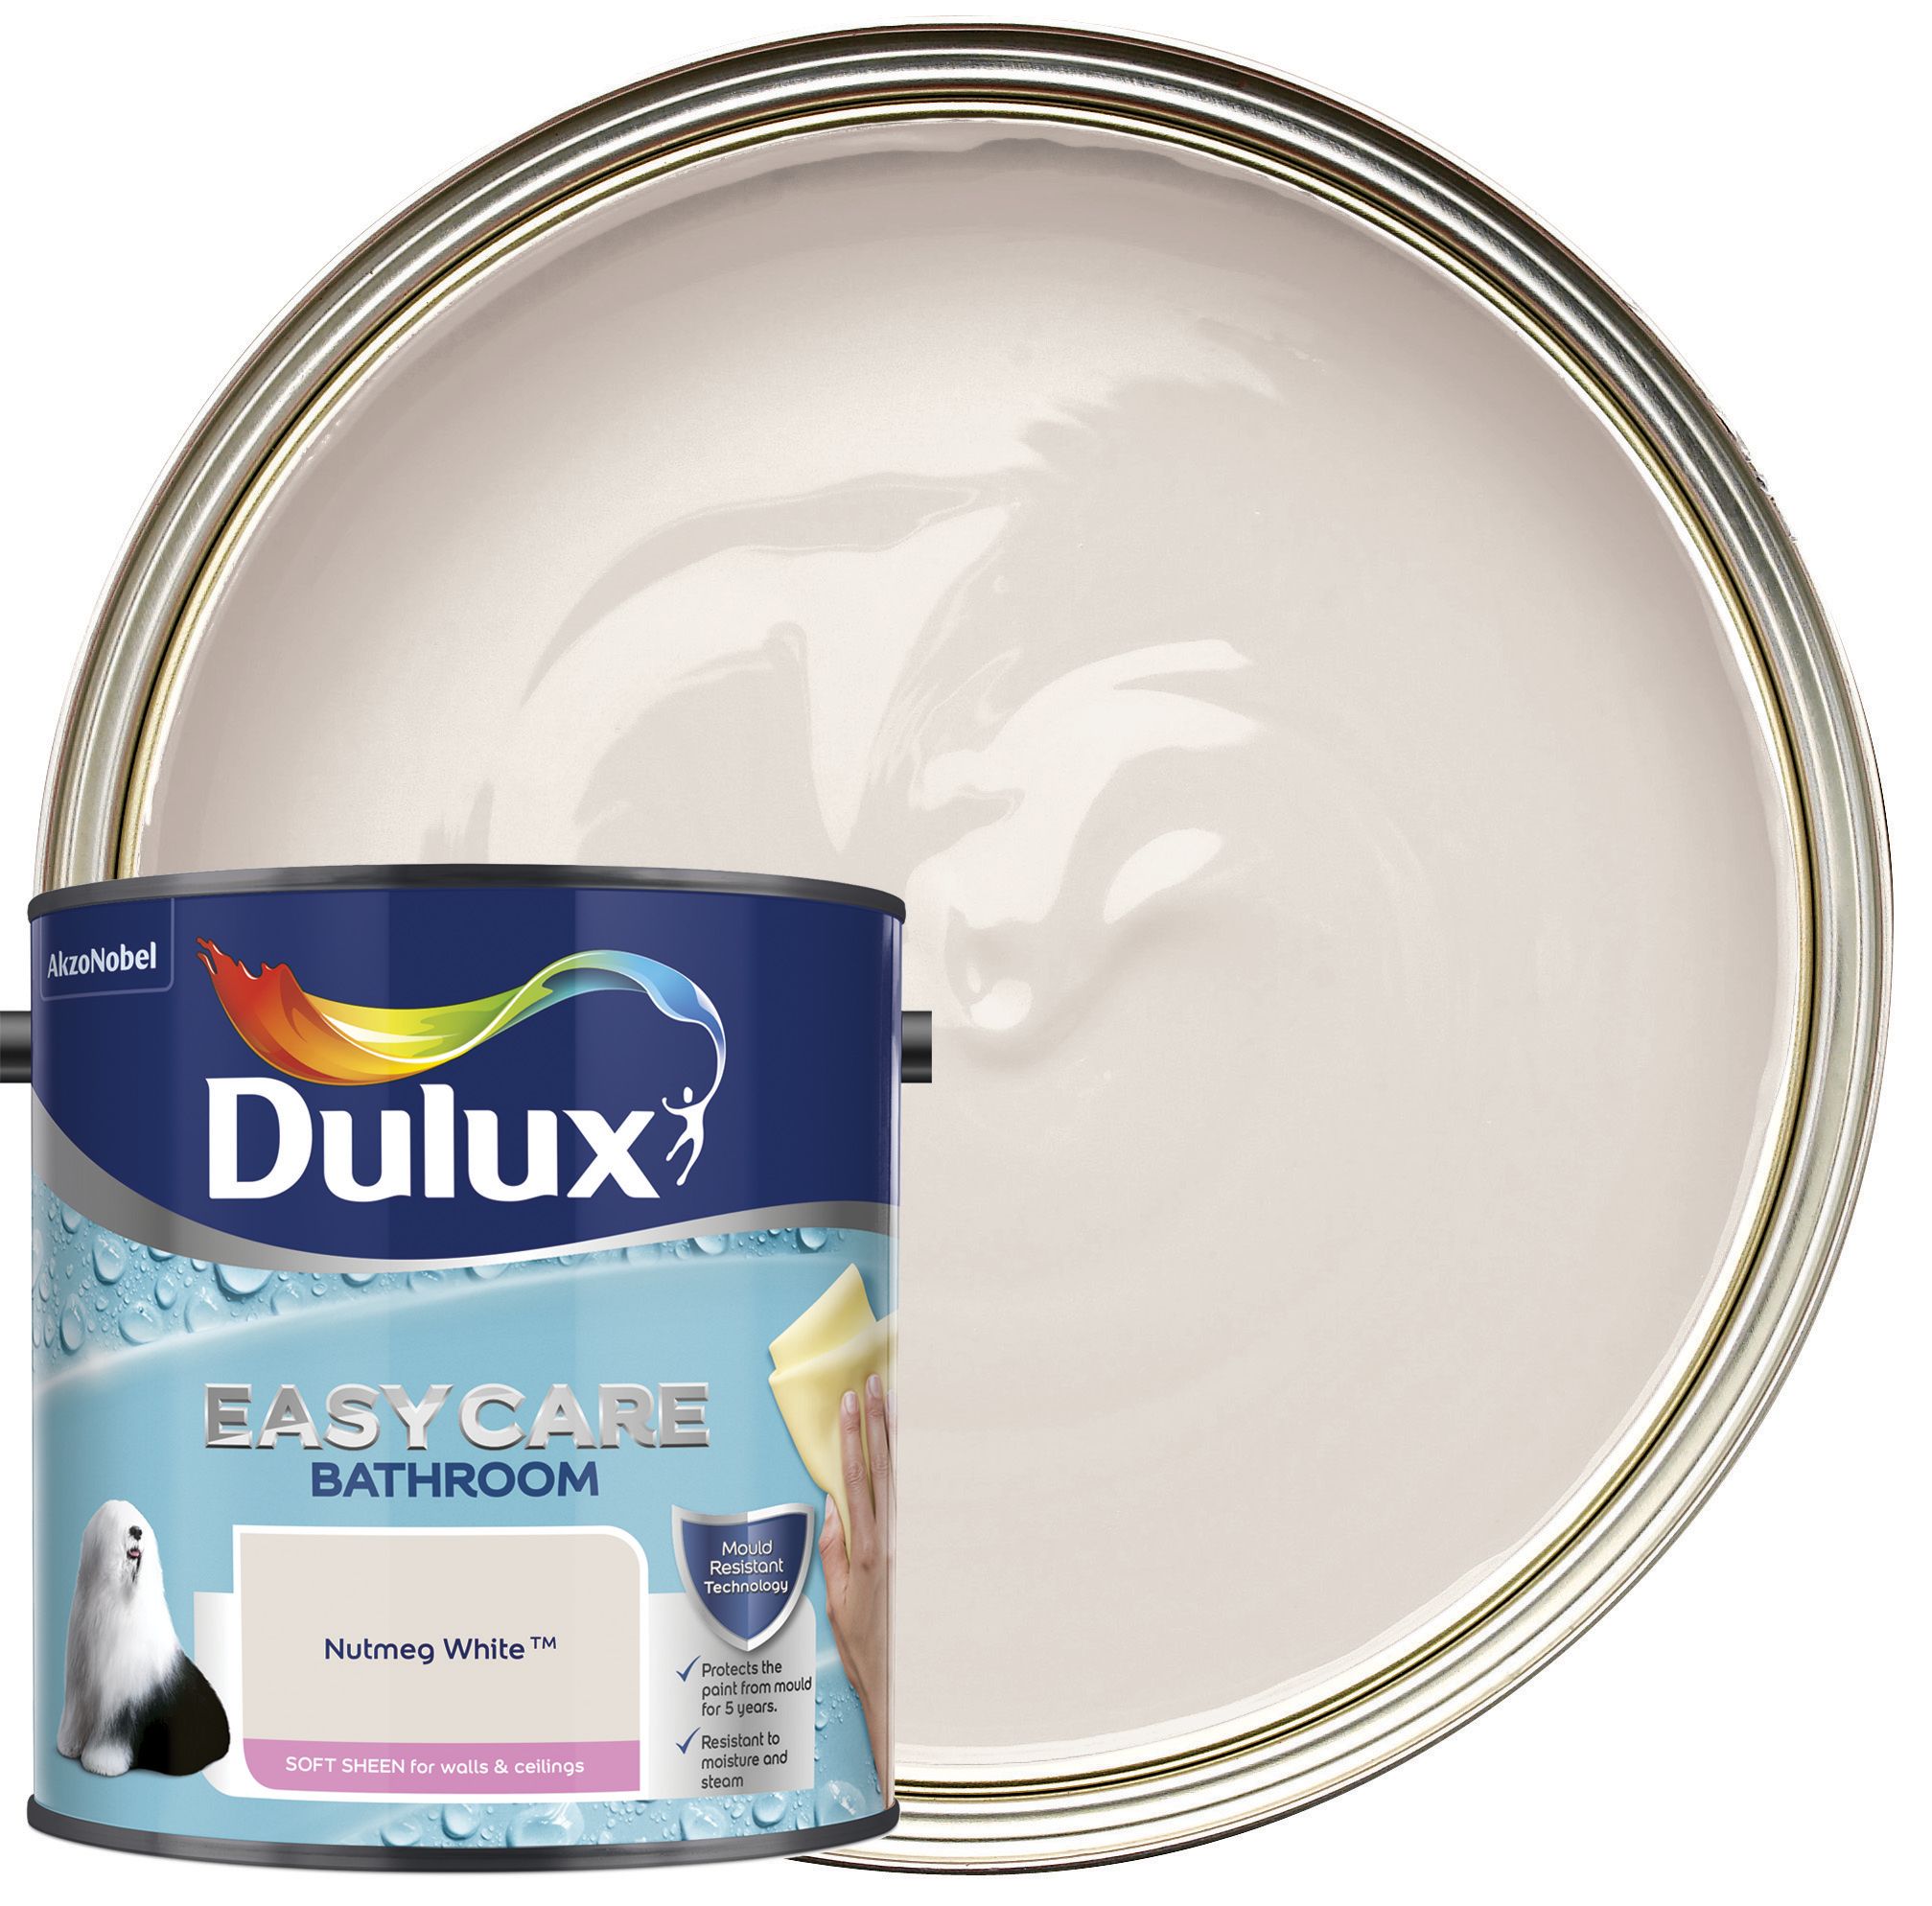 Dulux Easycare Bathroom Soft Sheen Emulsion Paint -